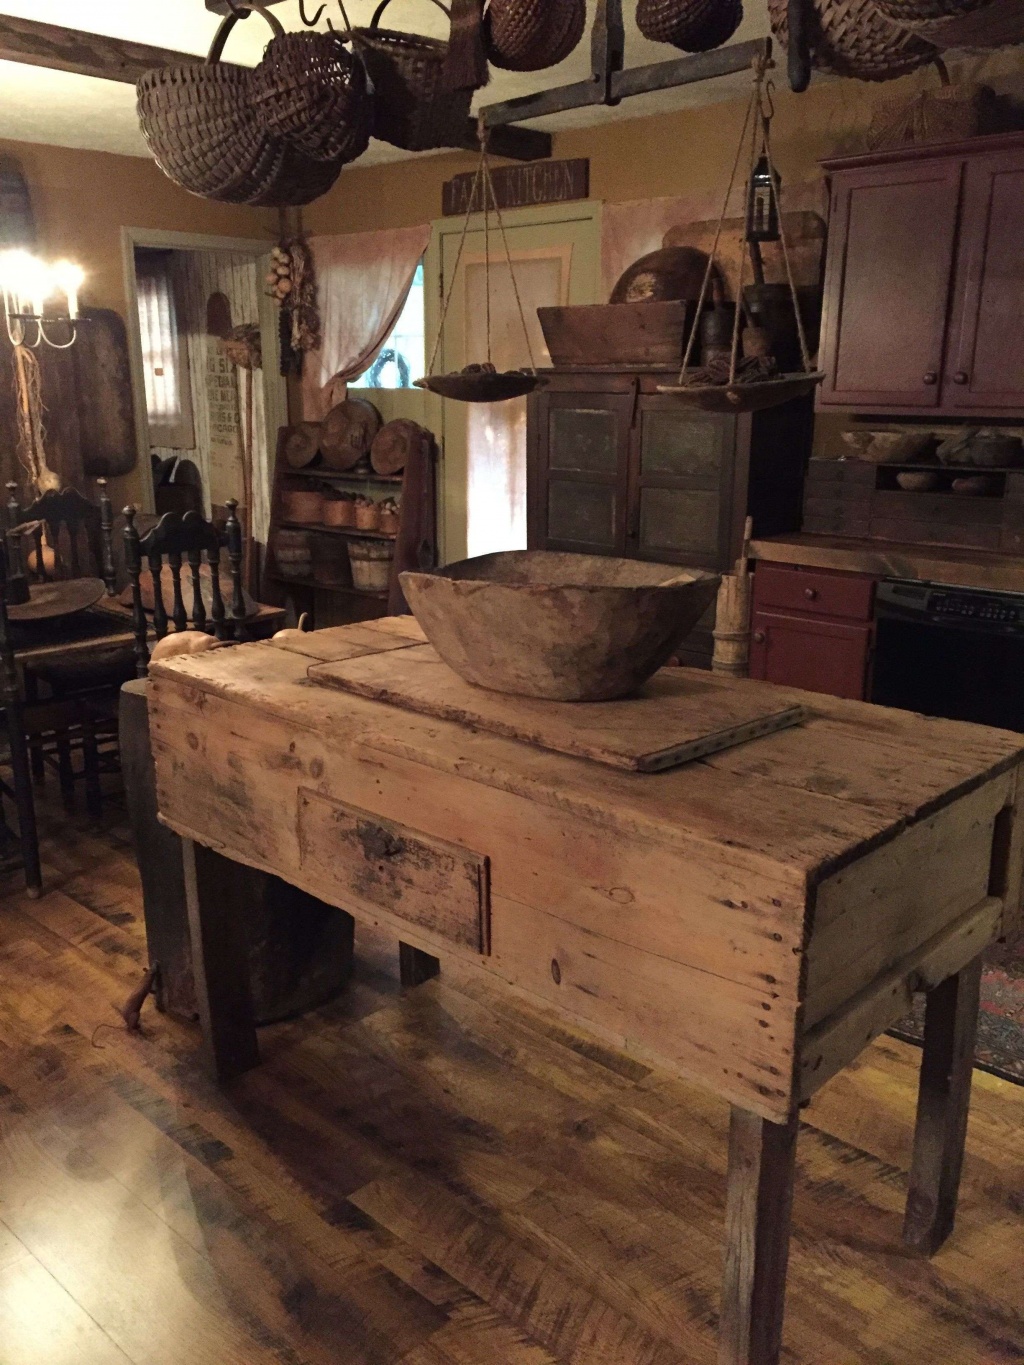 Old primitive kitchen